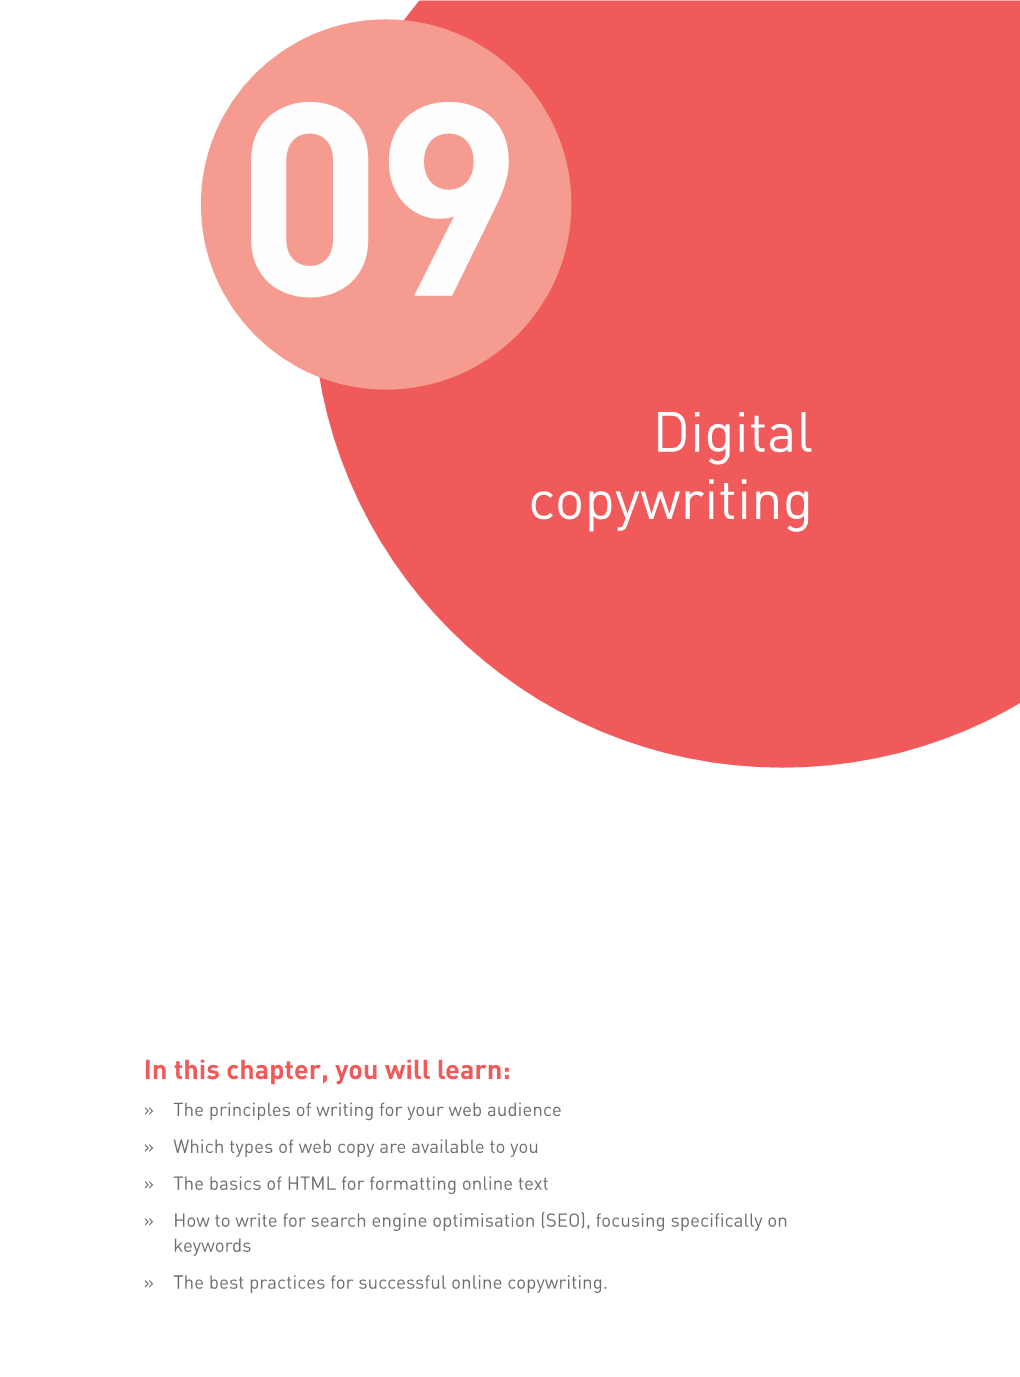 Digital Copywriting › Introduction Digital Copywriting › Core Principles